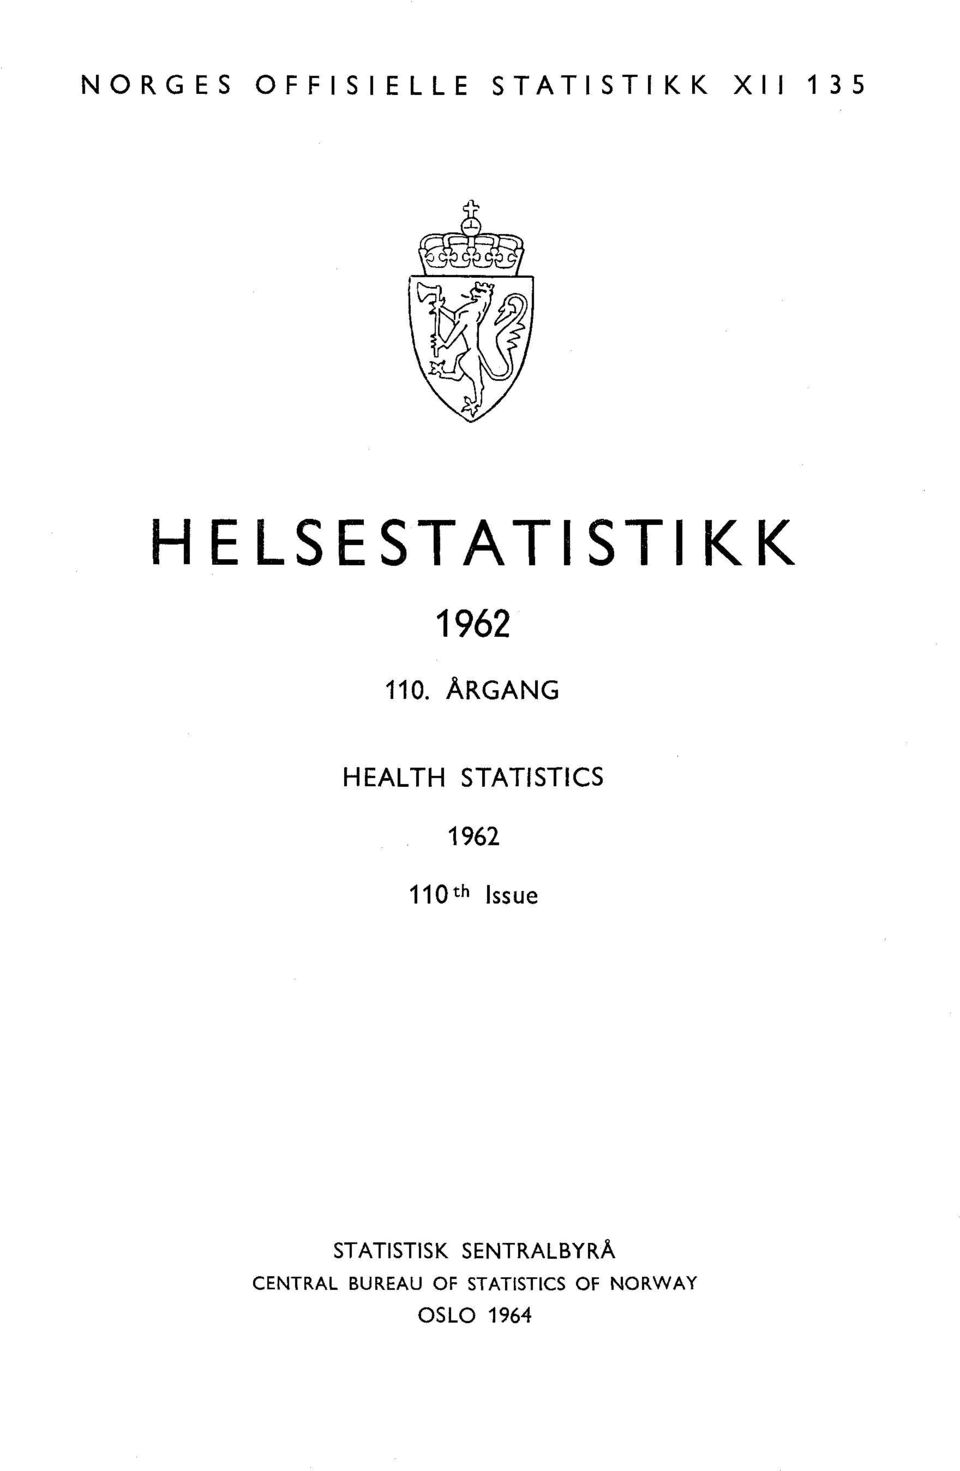 ÅRGANG HEALTH STATISTICS 96 0th Issue